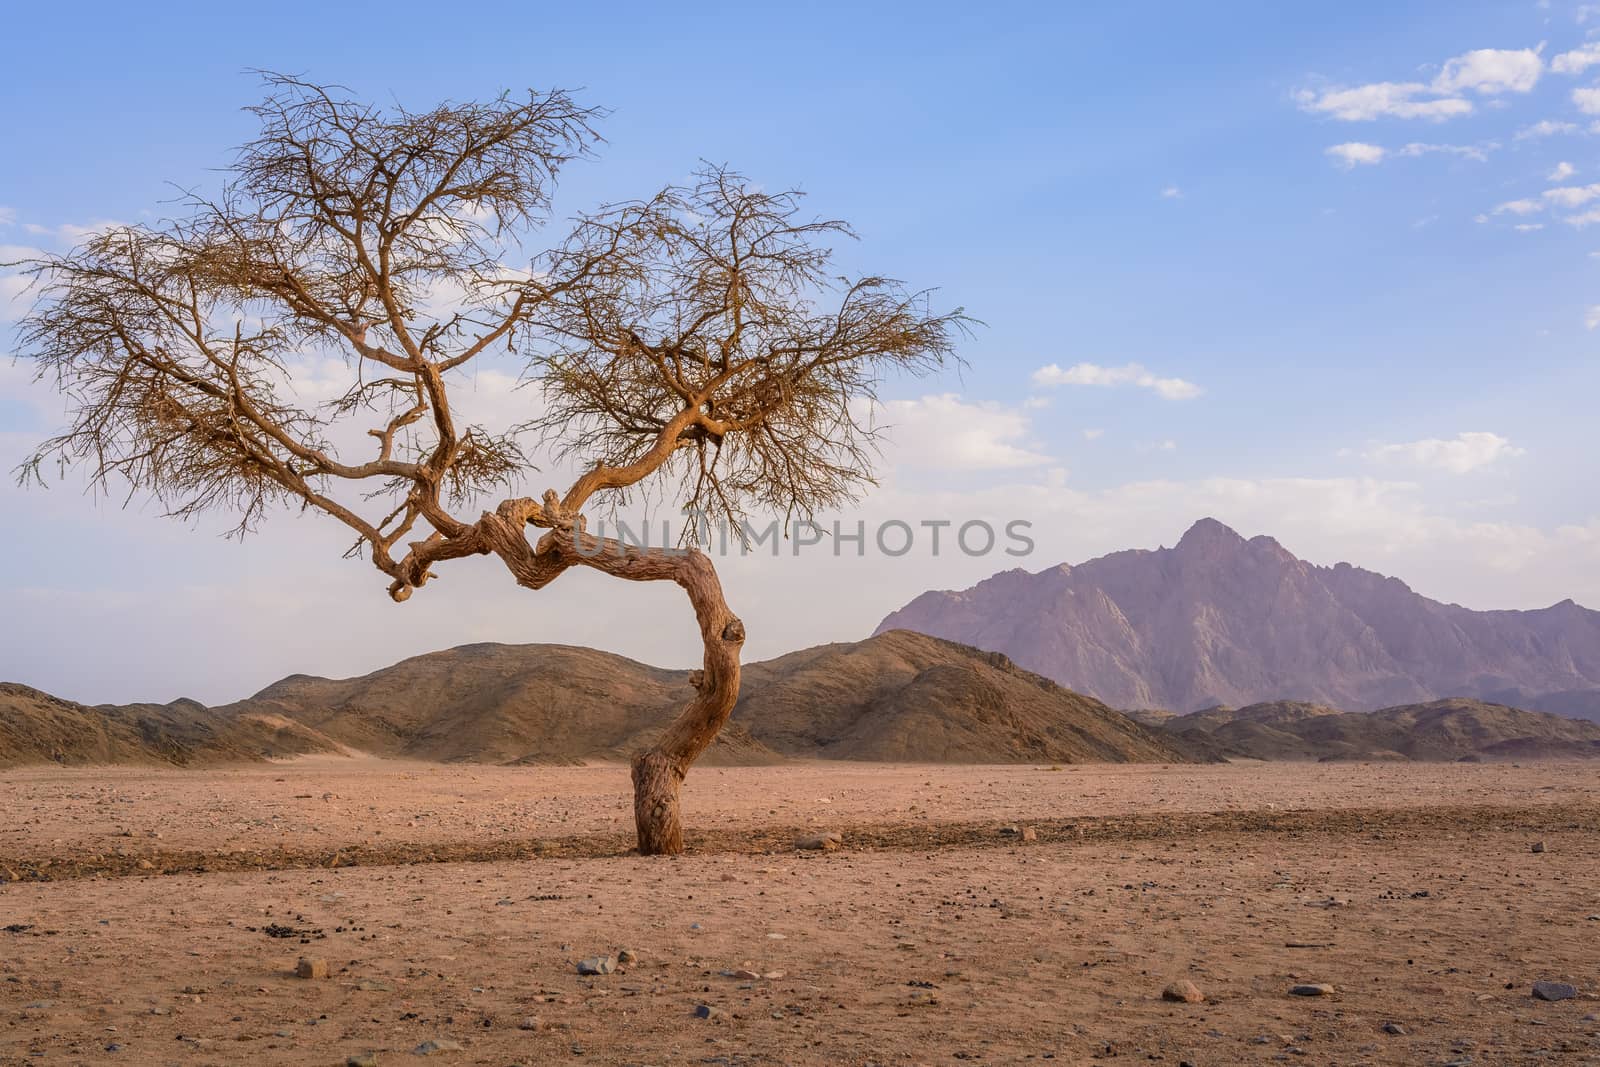 Acacia tree alone by Robertobinetti70